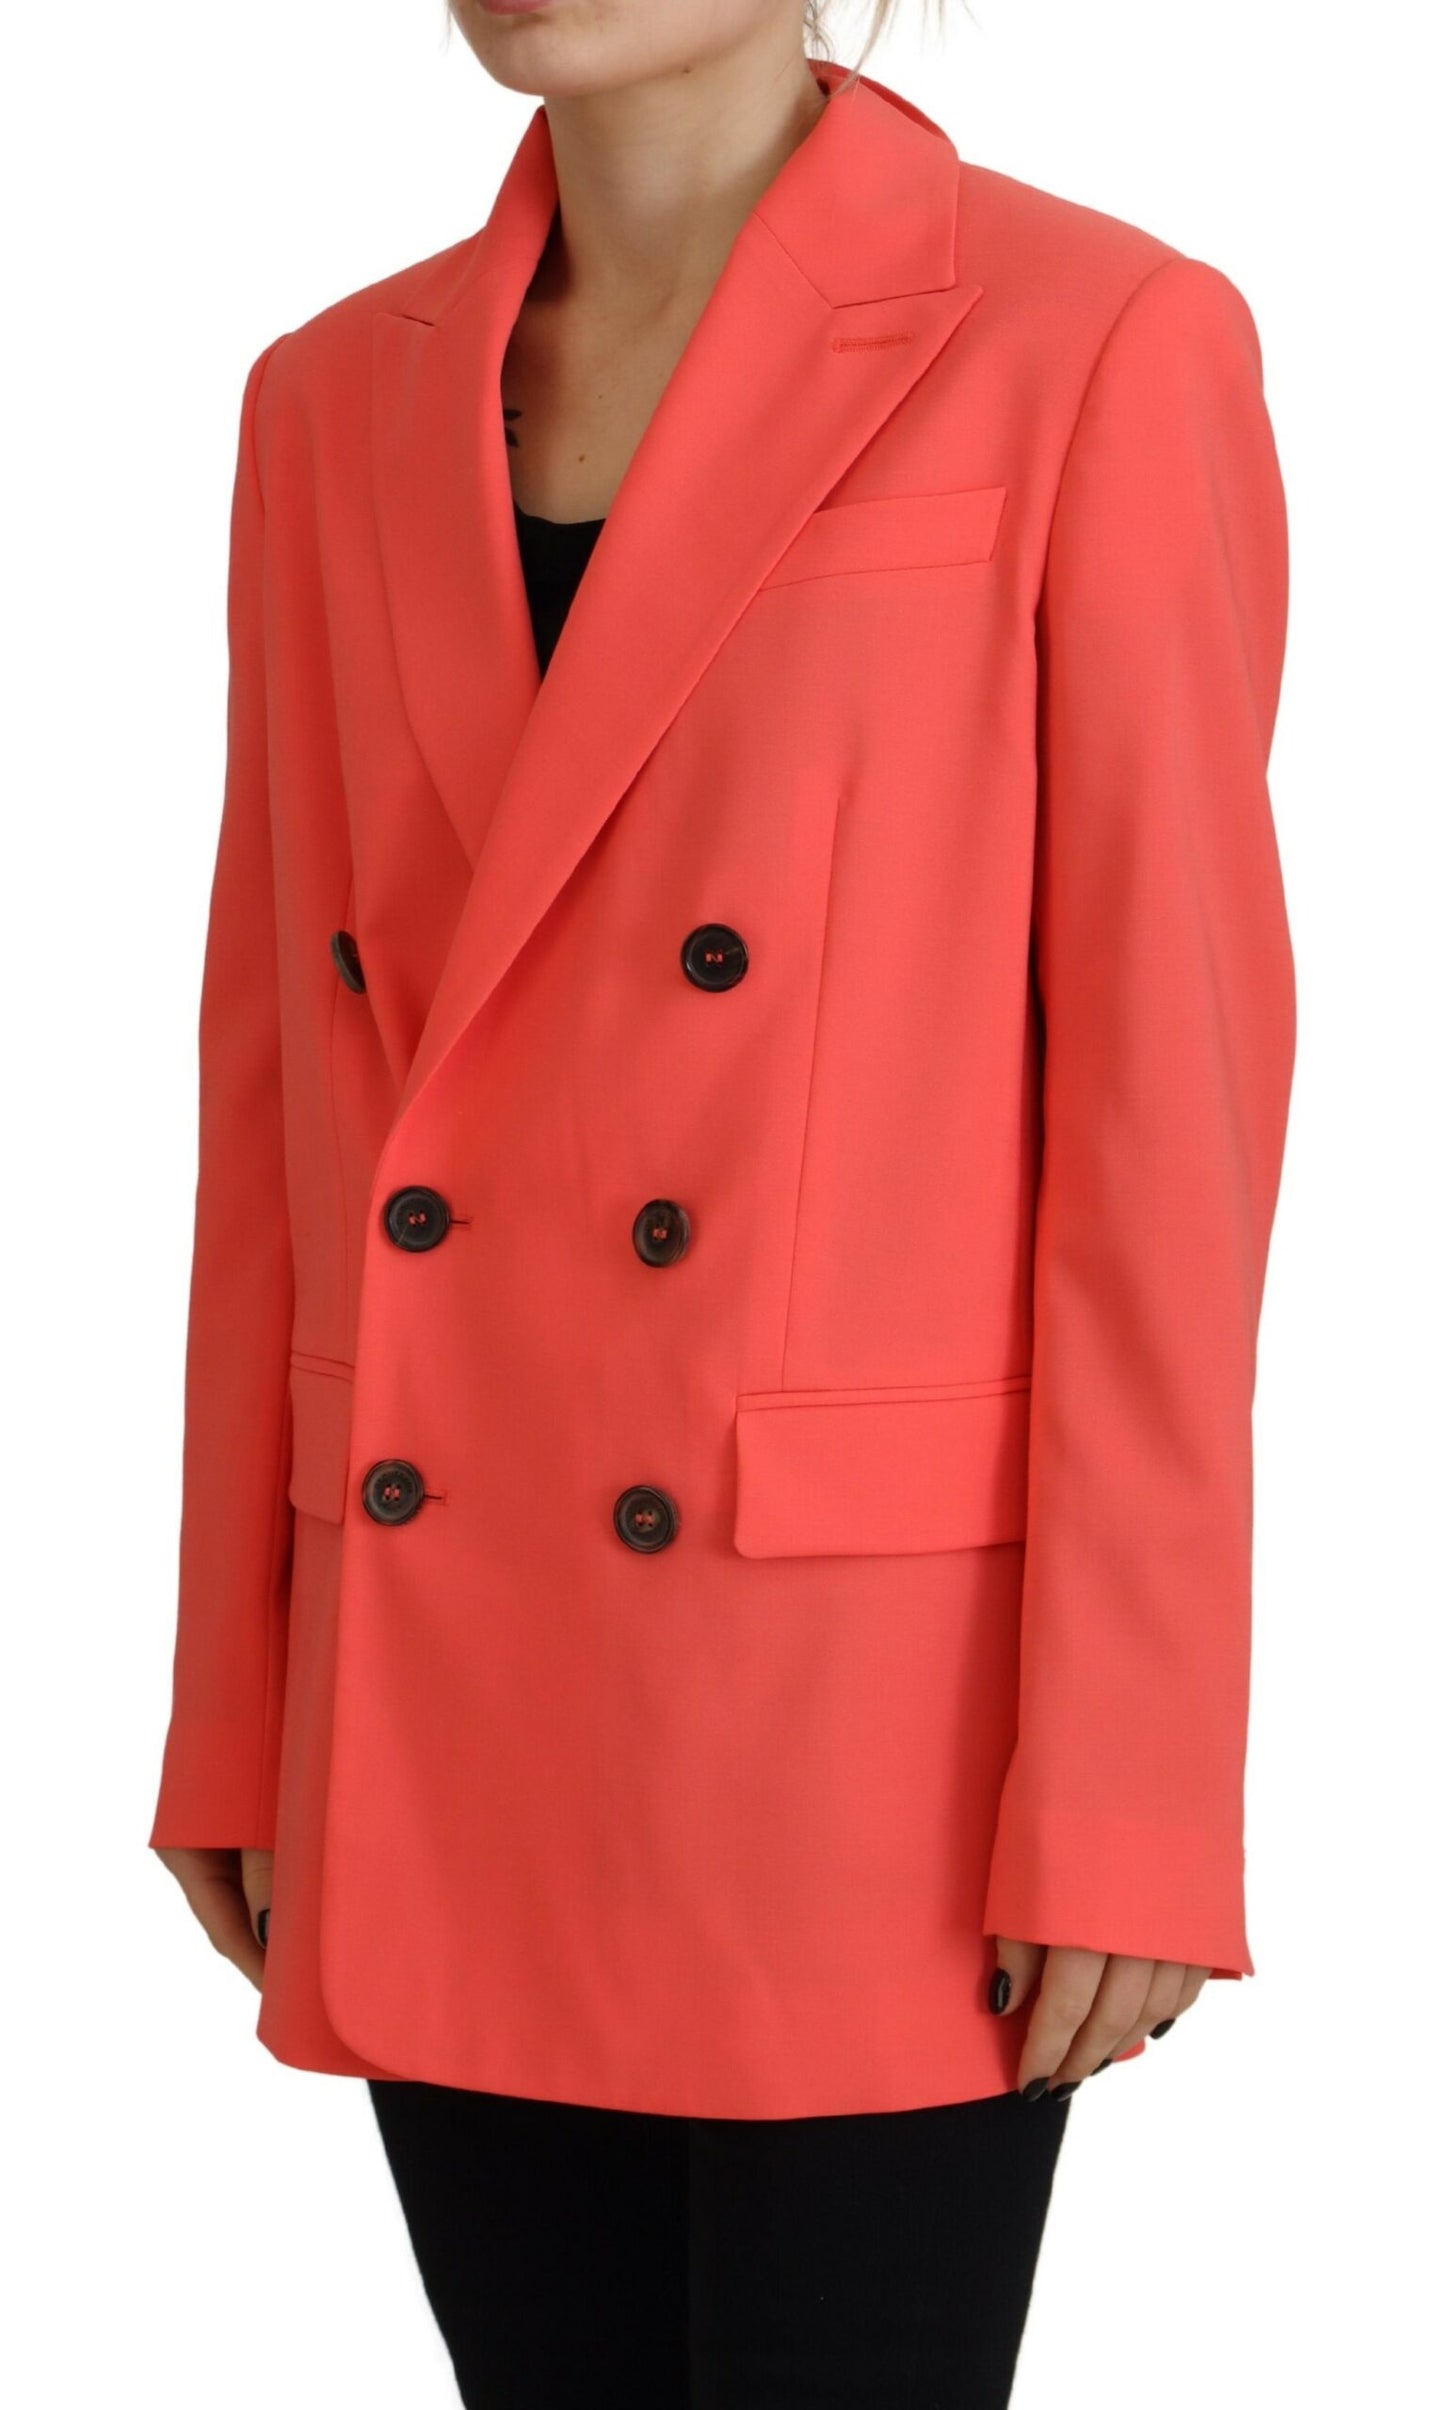 Pink Double Breasted Coat Blazer Jacket